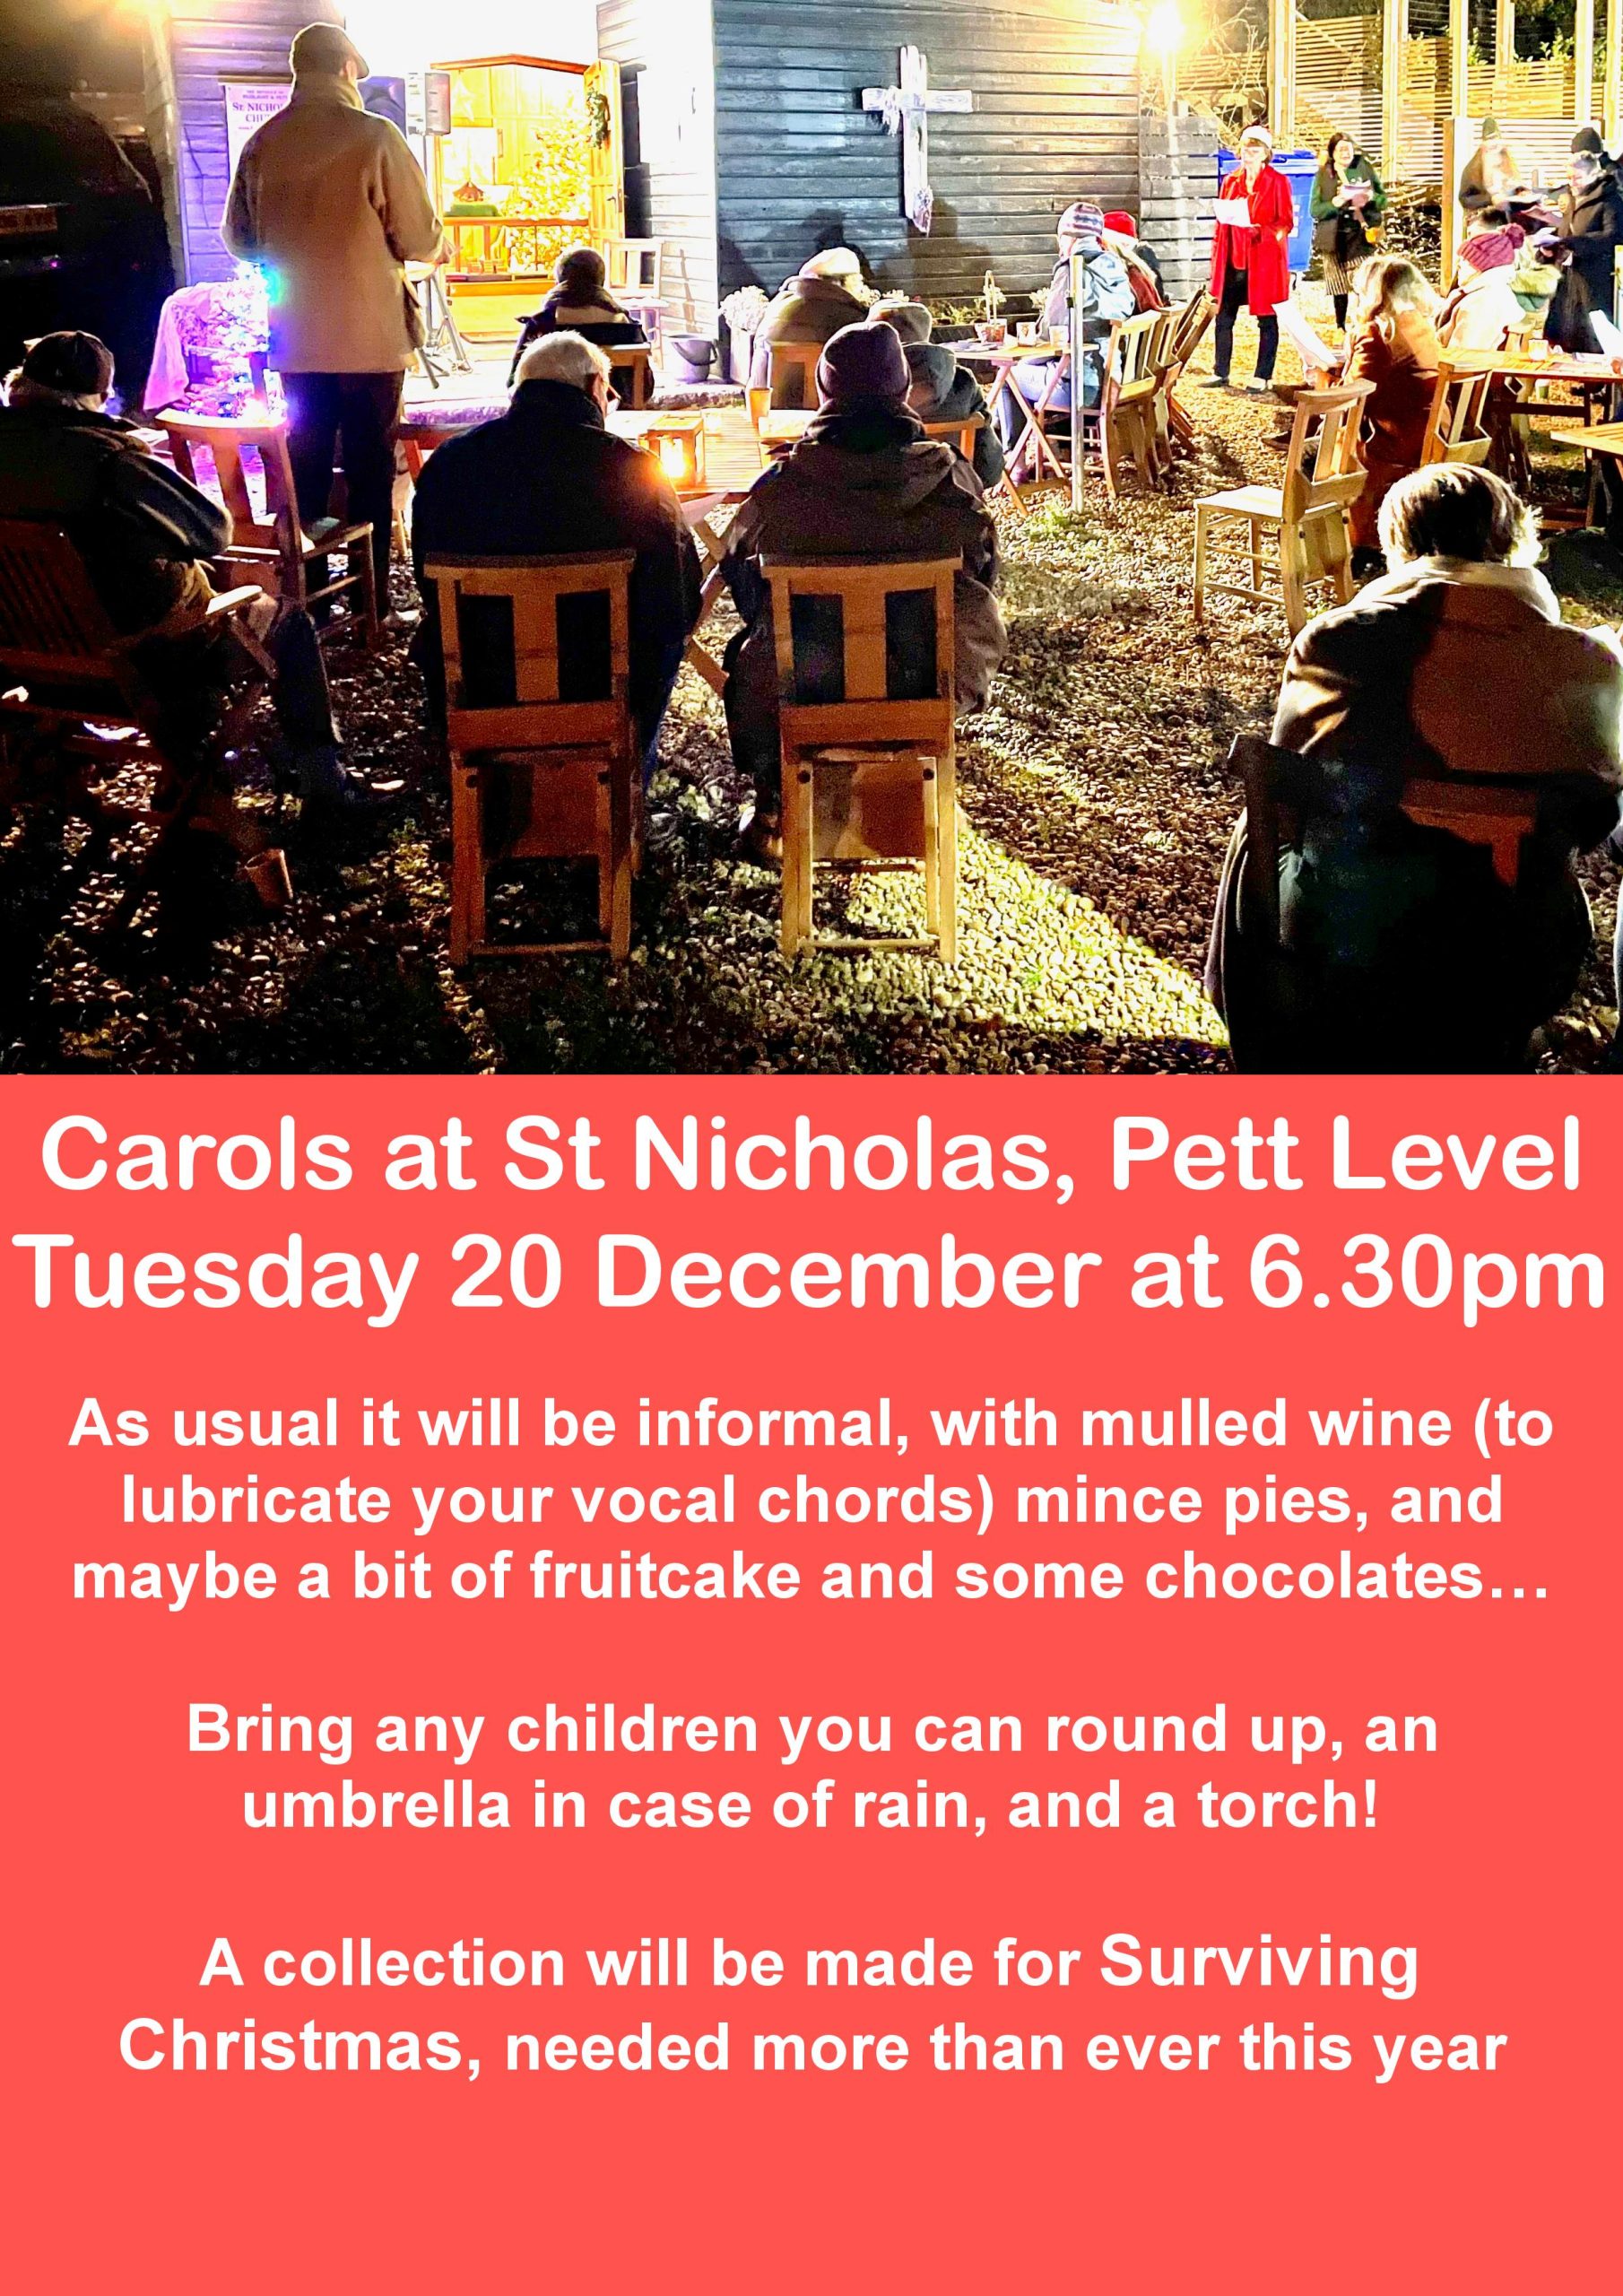 Carol Service St Nicholas Tuesday 20 December 6.30pm